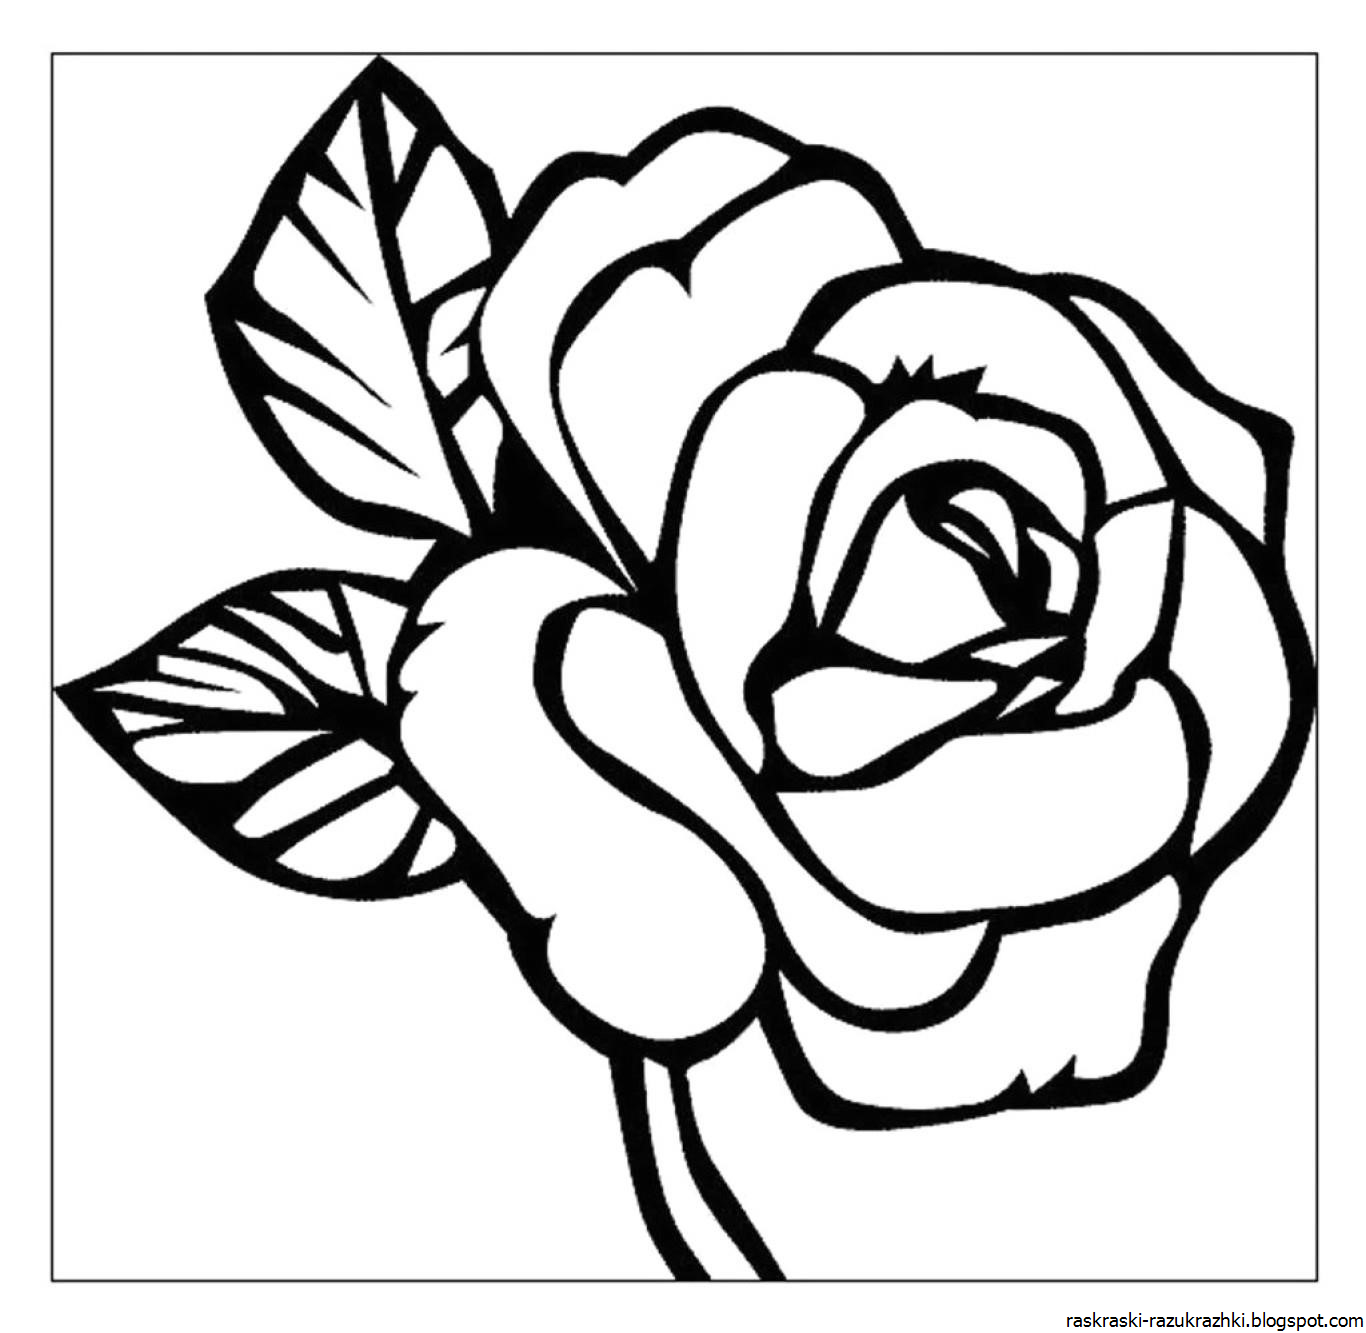 Черно белые рисунки шаблоны. Роза раскраска. Роза раскраска для детей. Раскраска роза цветок. Трафарет розы для раскрашивания.